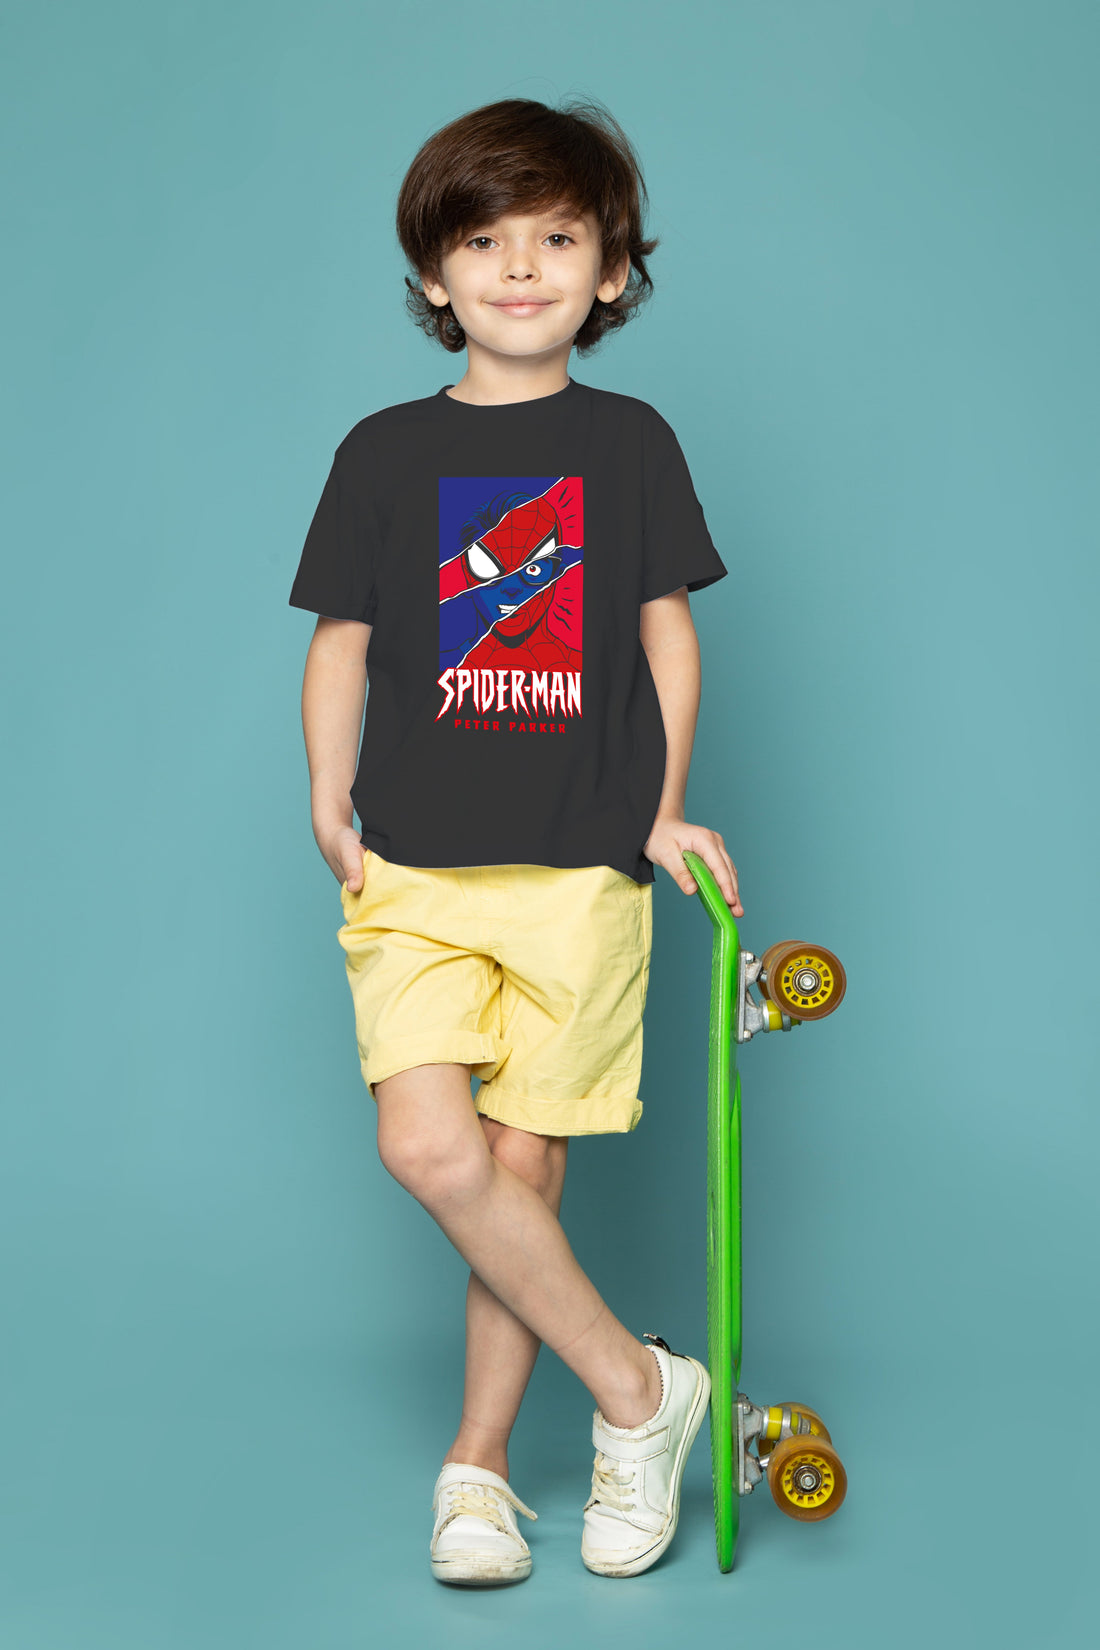 Spider-Man (Peter Parker) - Graphic Pure Cotton Black T-Shirt for Kids - Regular Fit Comfort